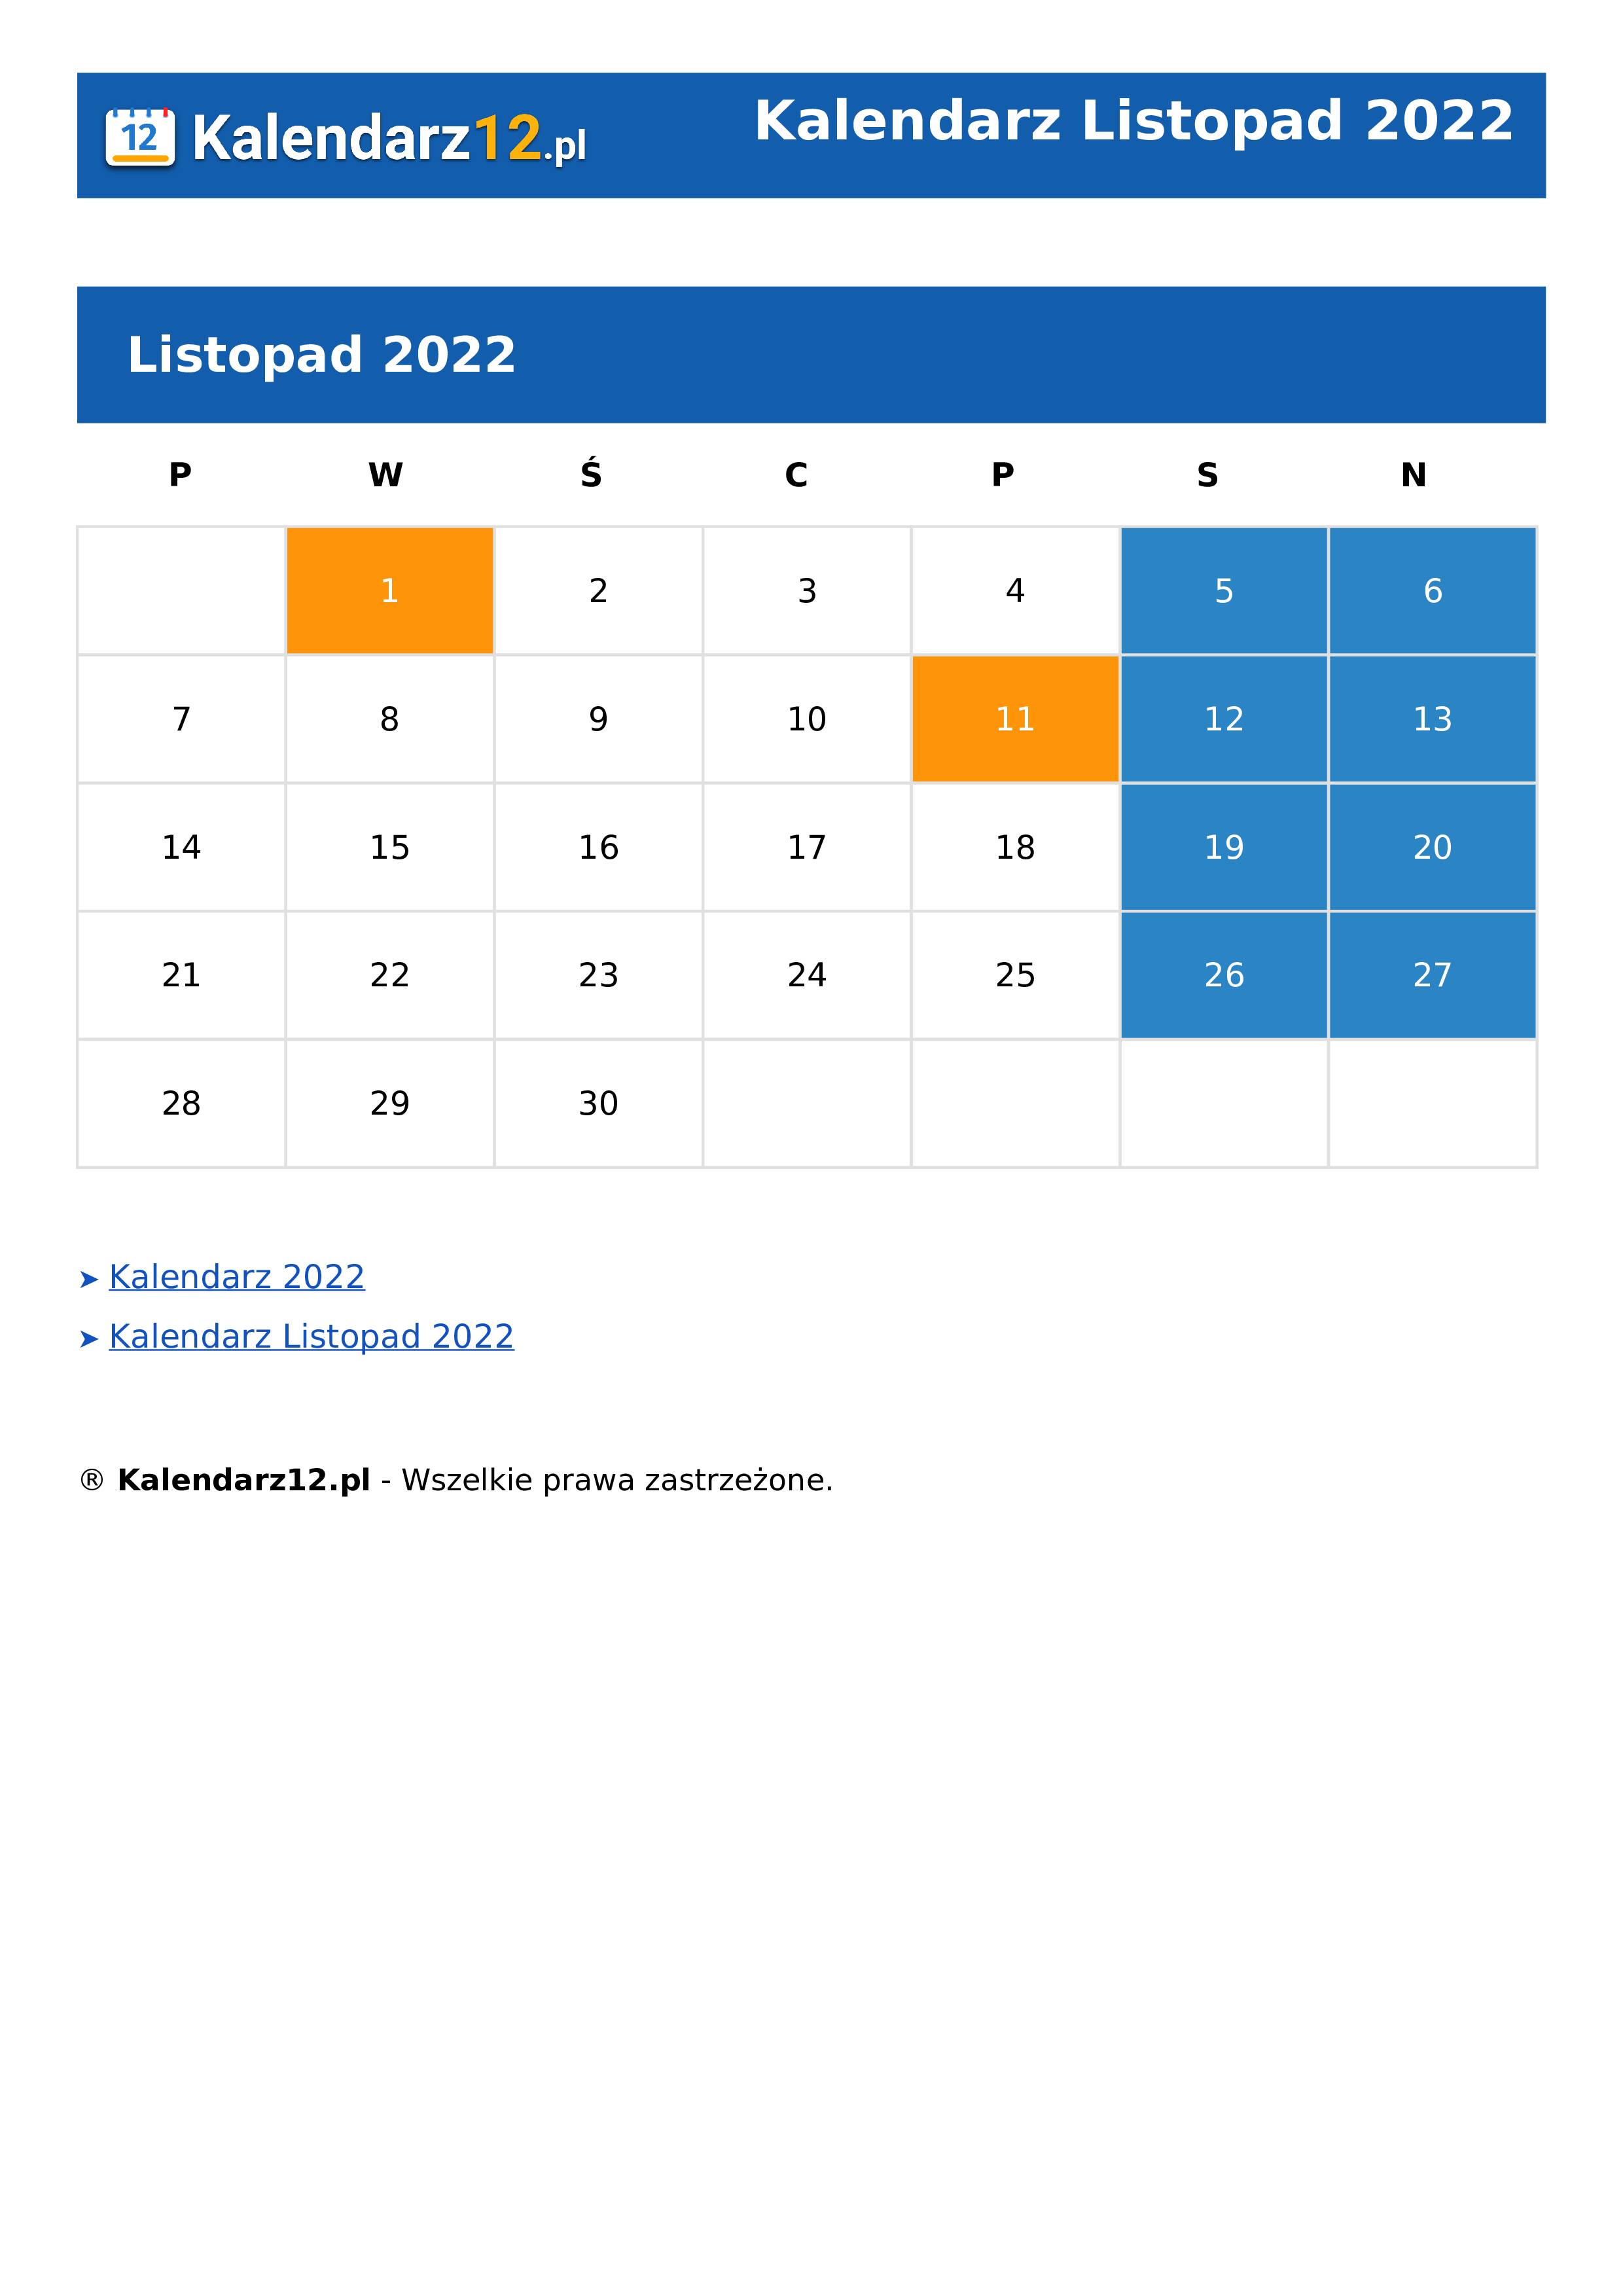 Calendar Listopad 2022